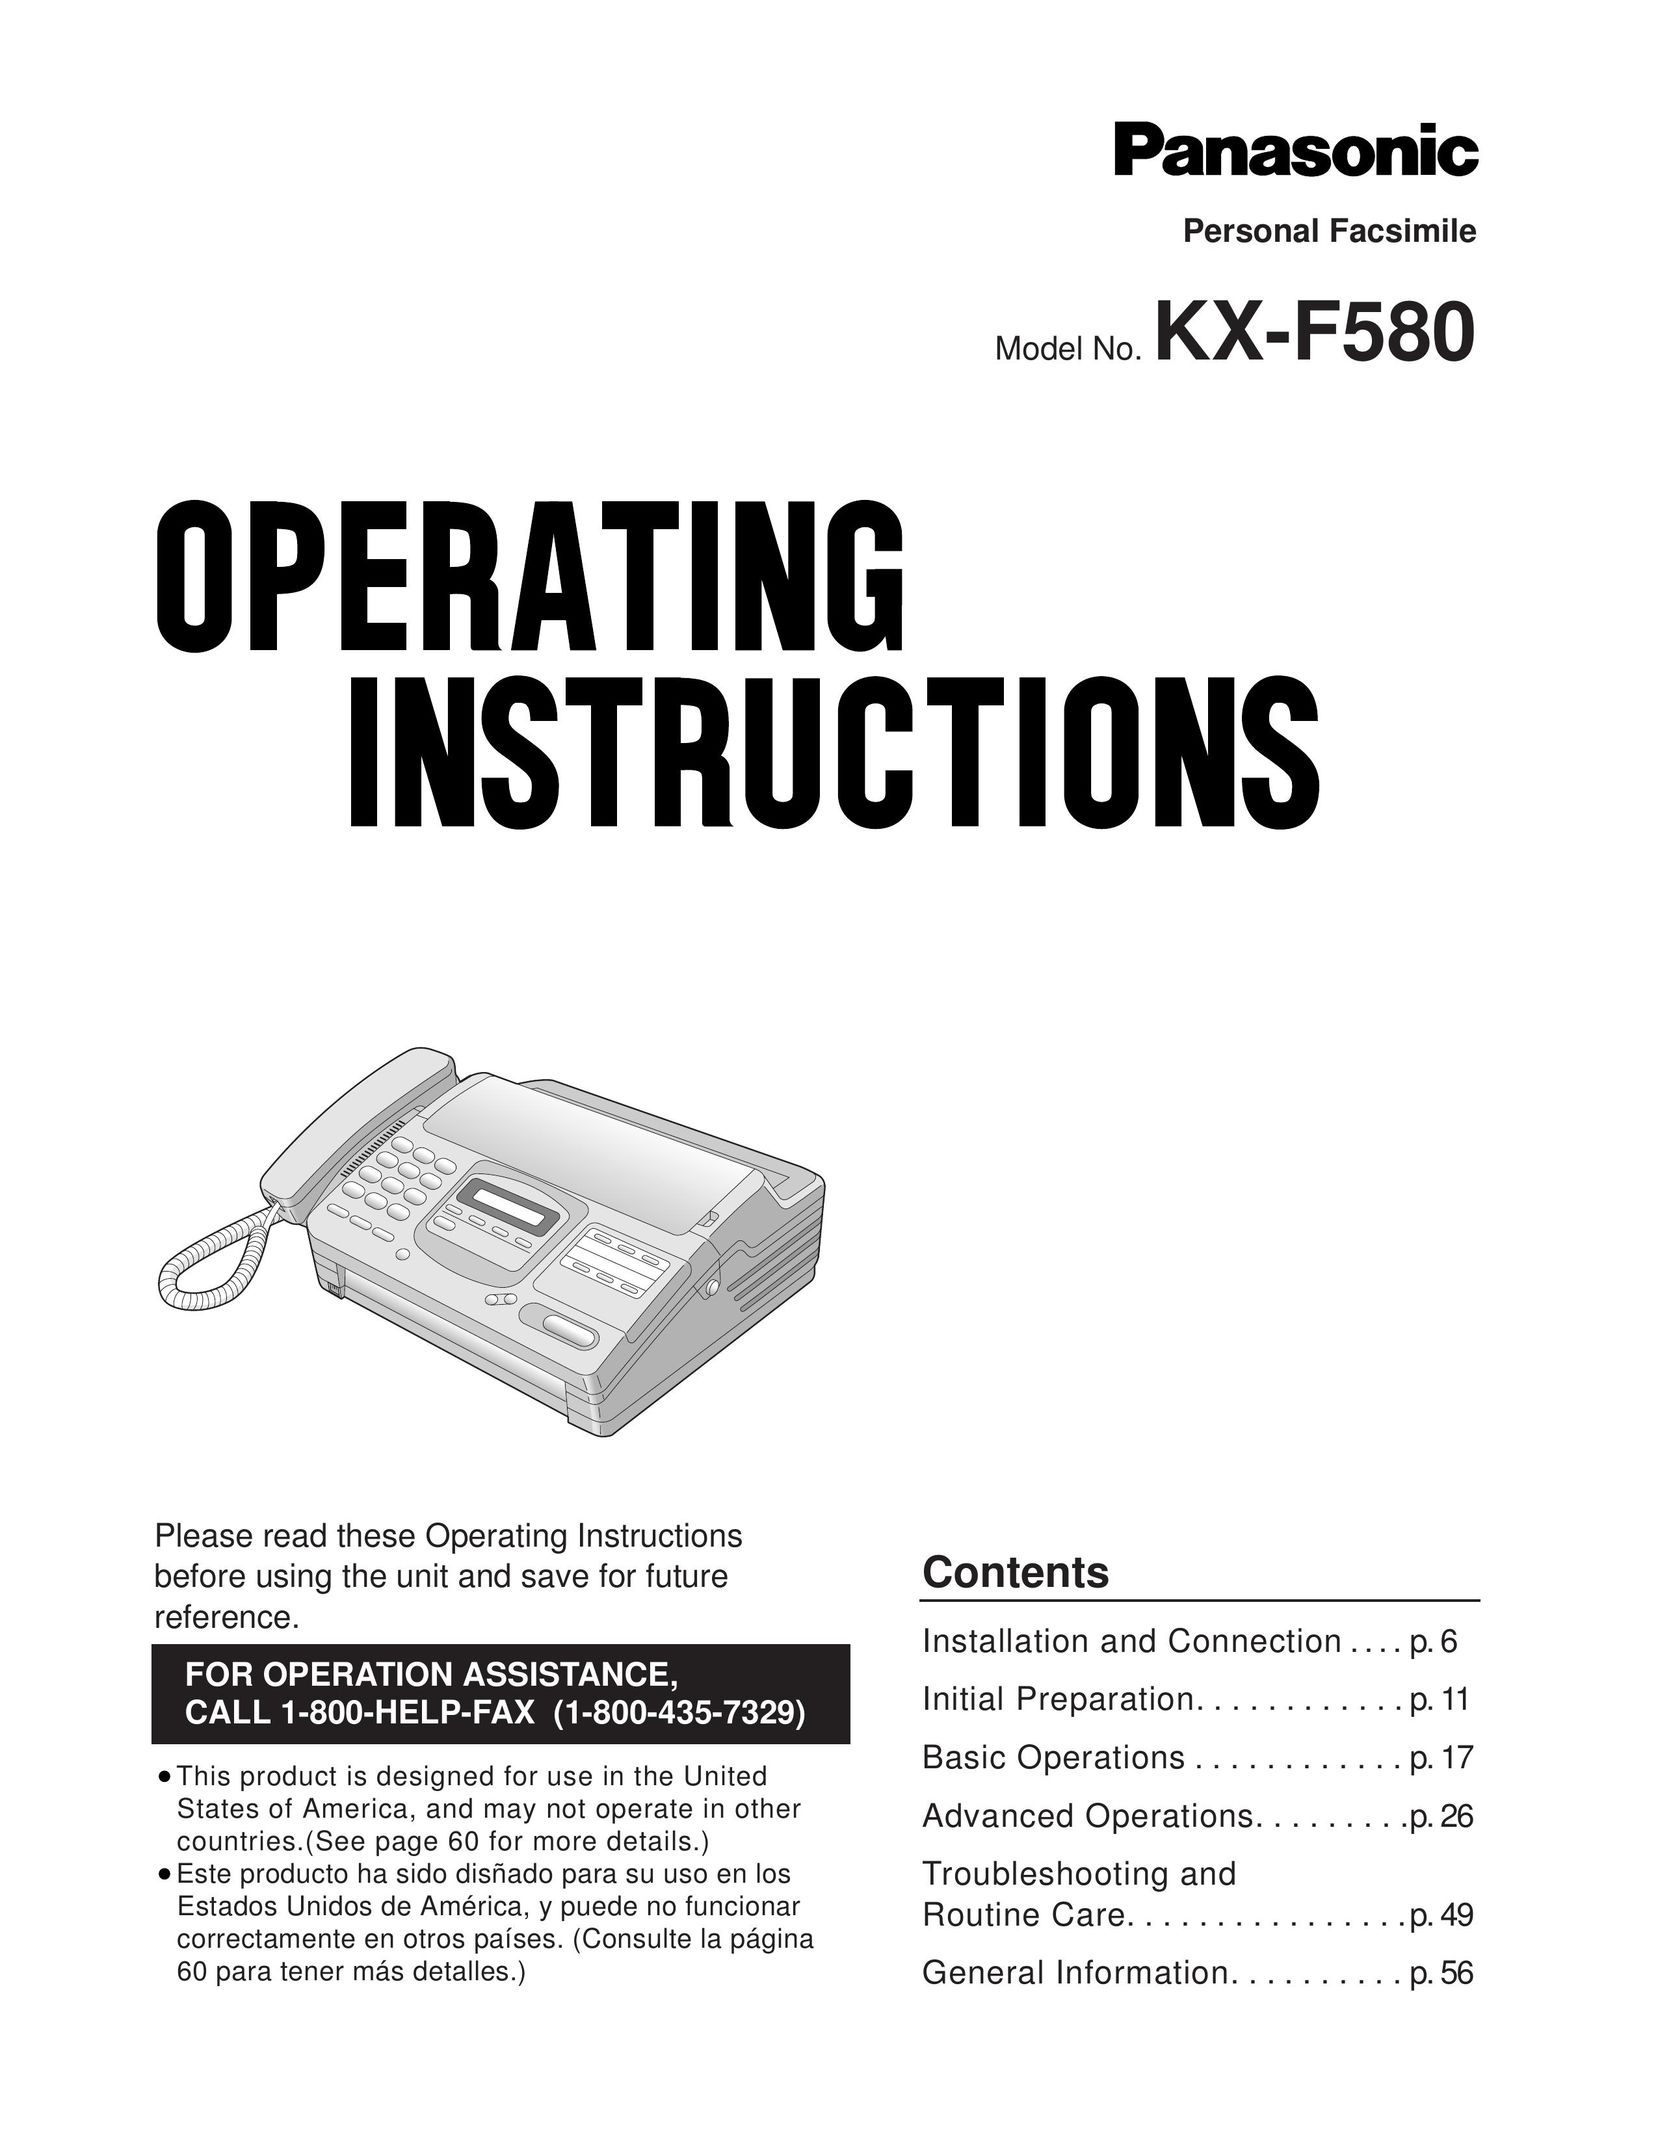 Panasonic KX-F580 Fax Machine User Manual